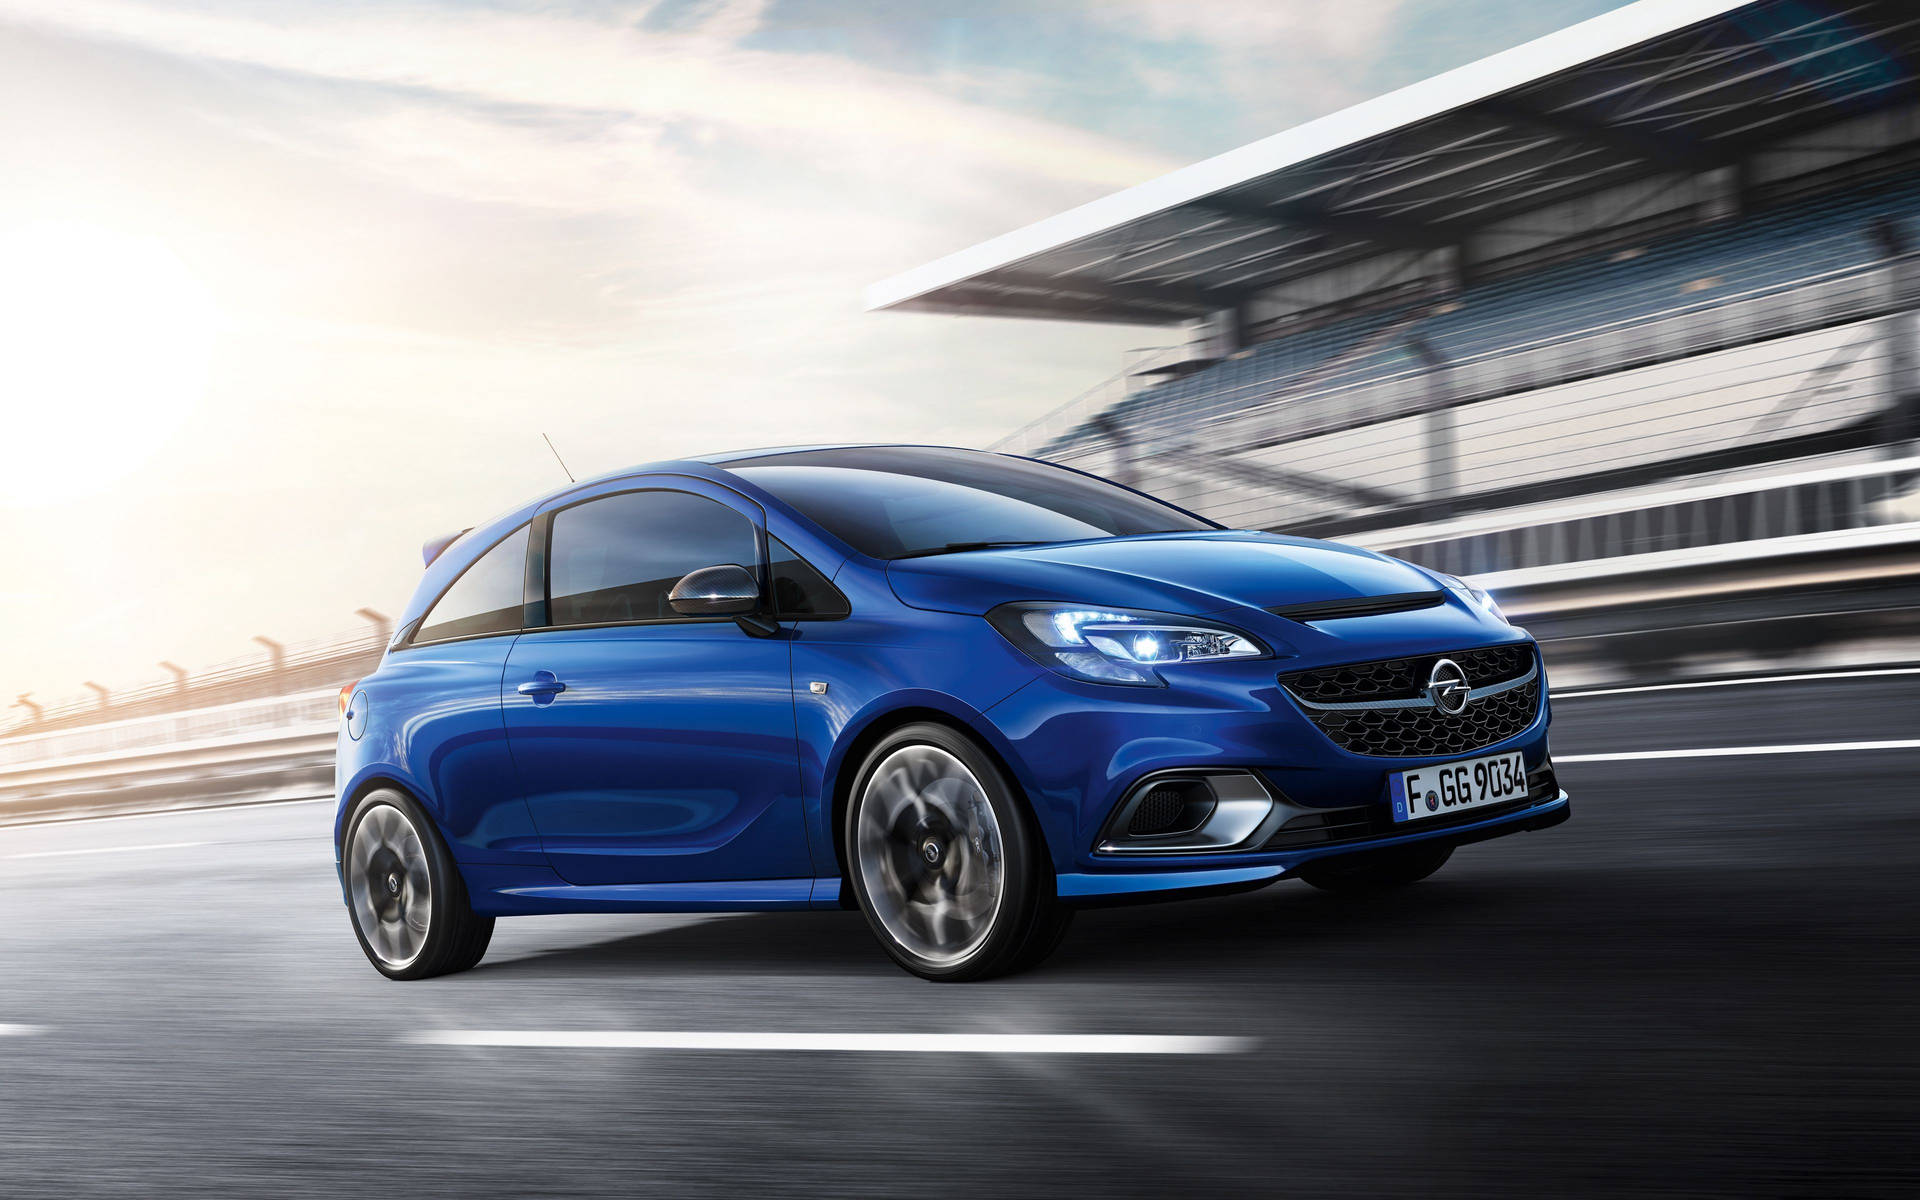 Opel Corsa Blue On Drive Wallpaper